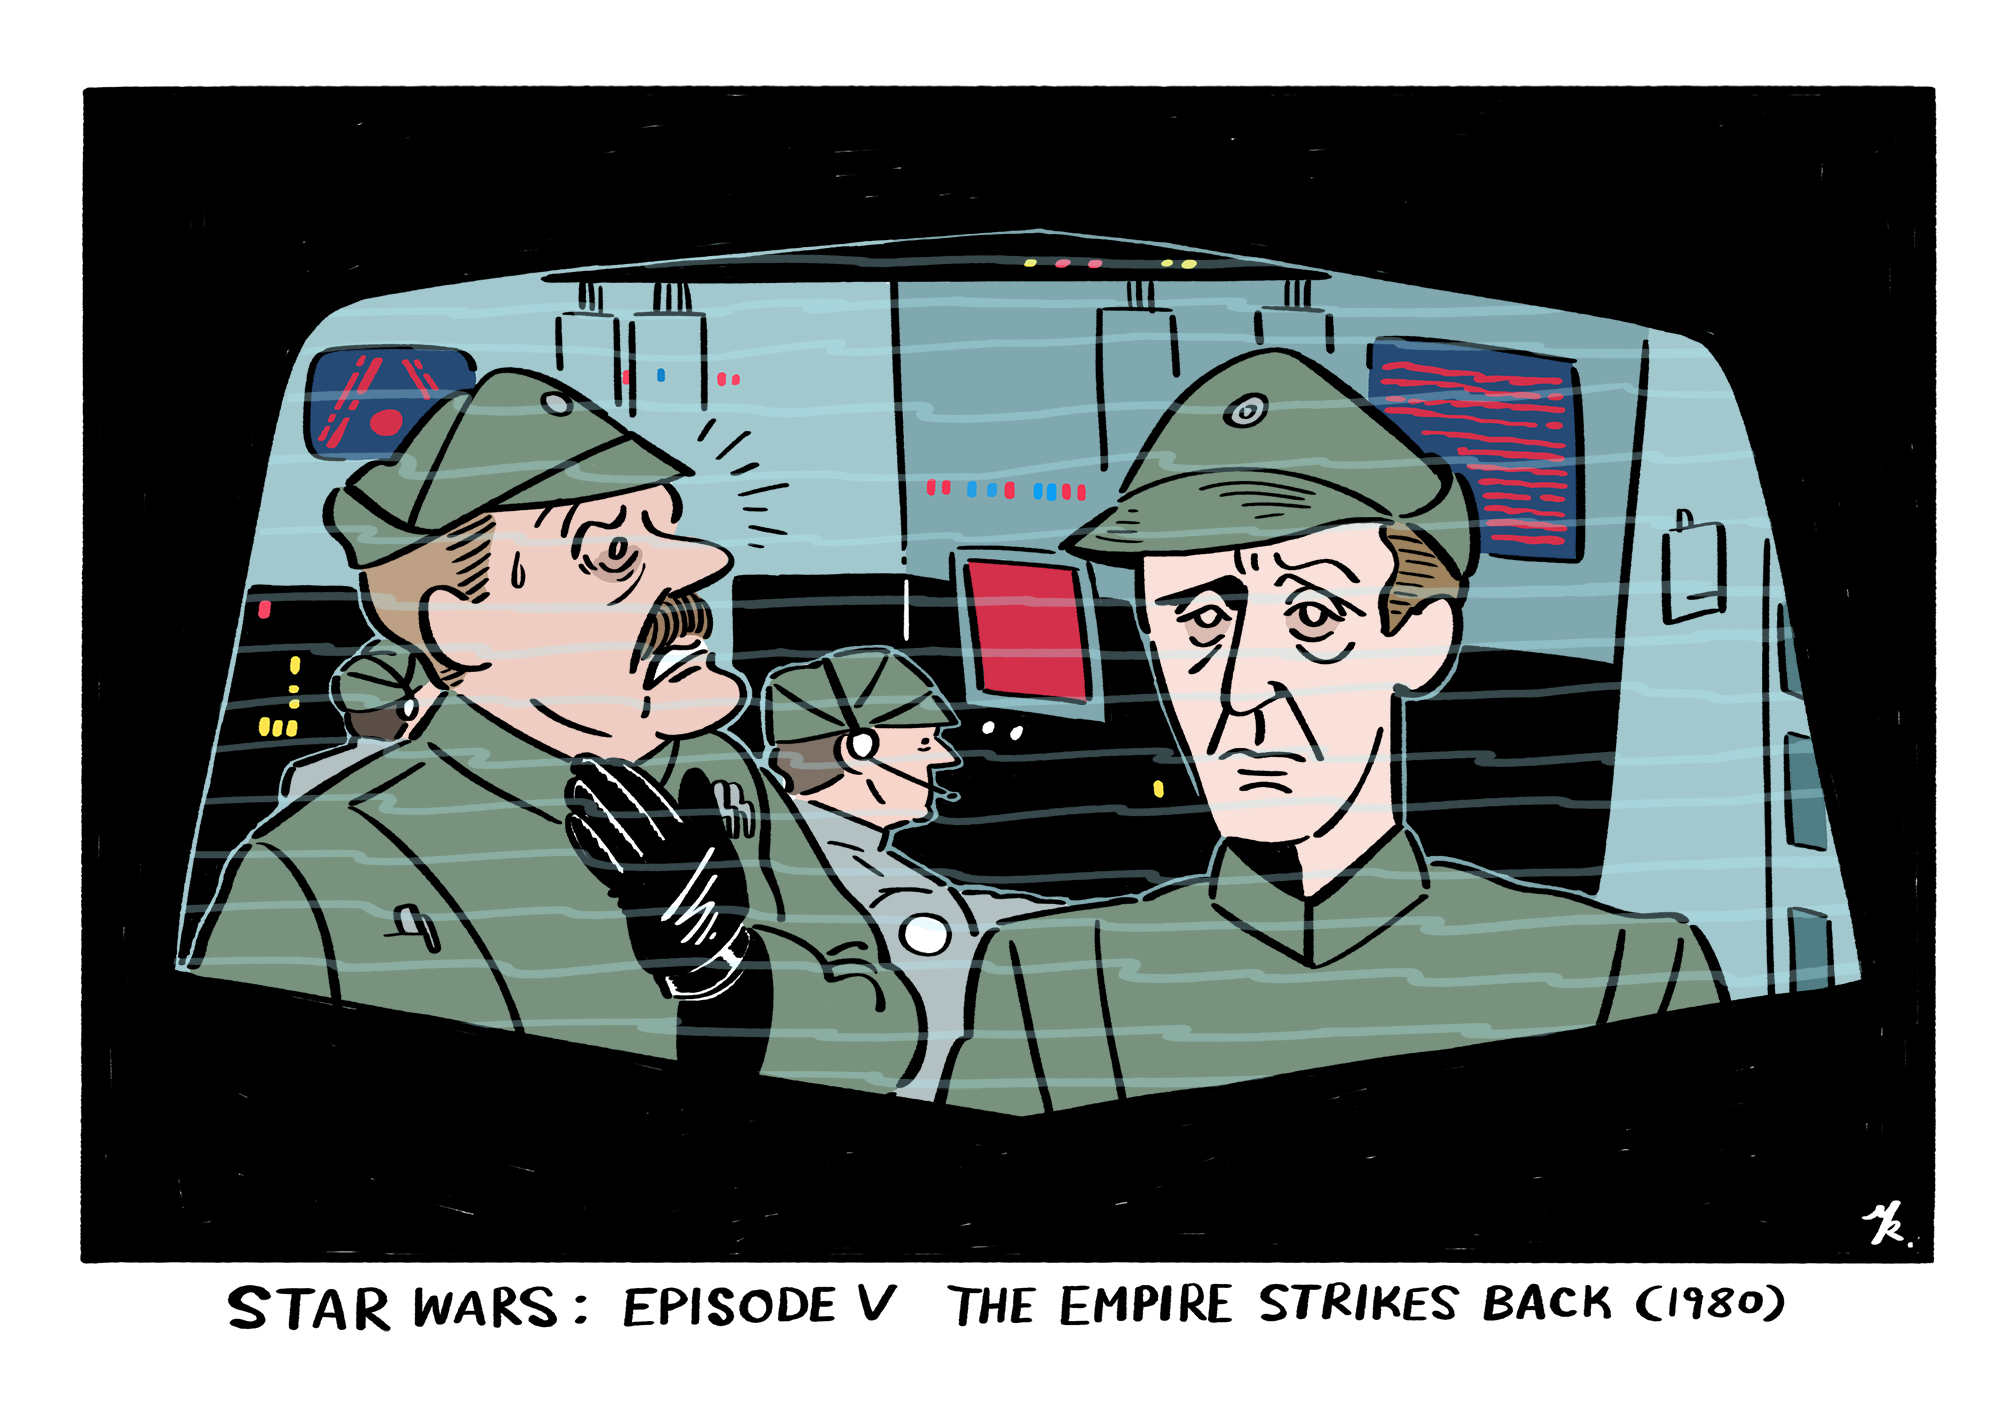 Star Wars: Episode V The Empire Strikes Back (1980)